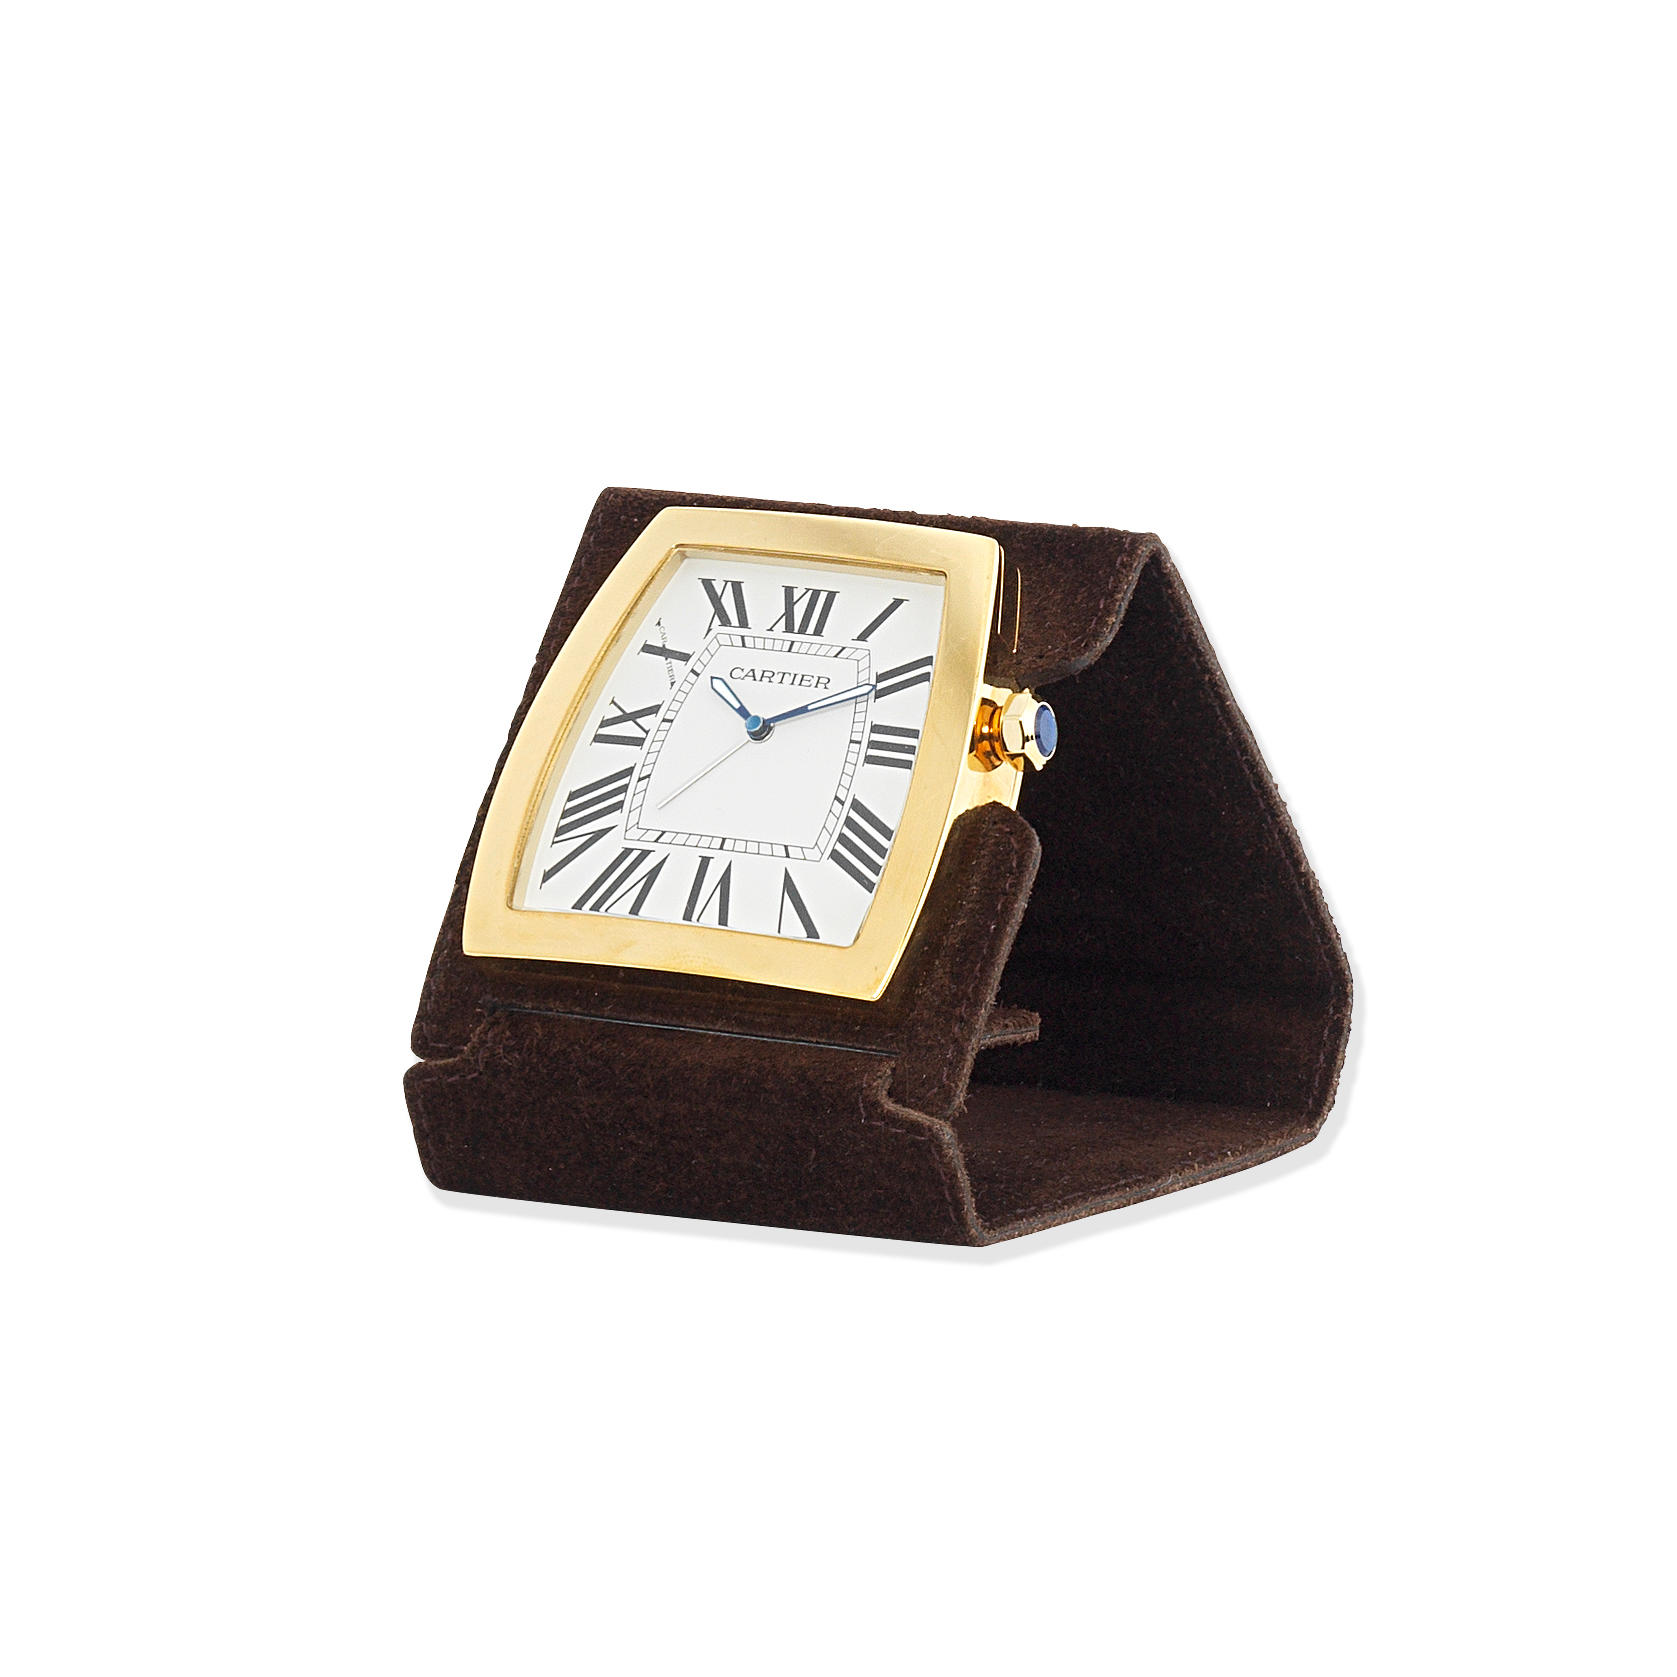 Cartier Must De Cartier Travel Alarm Clock – Analog:Shift